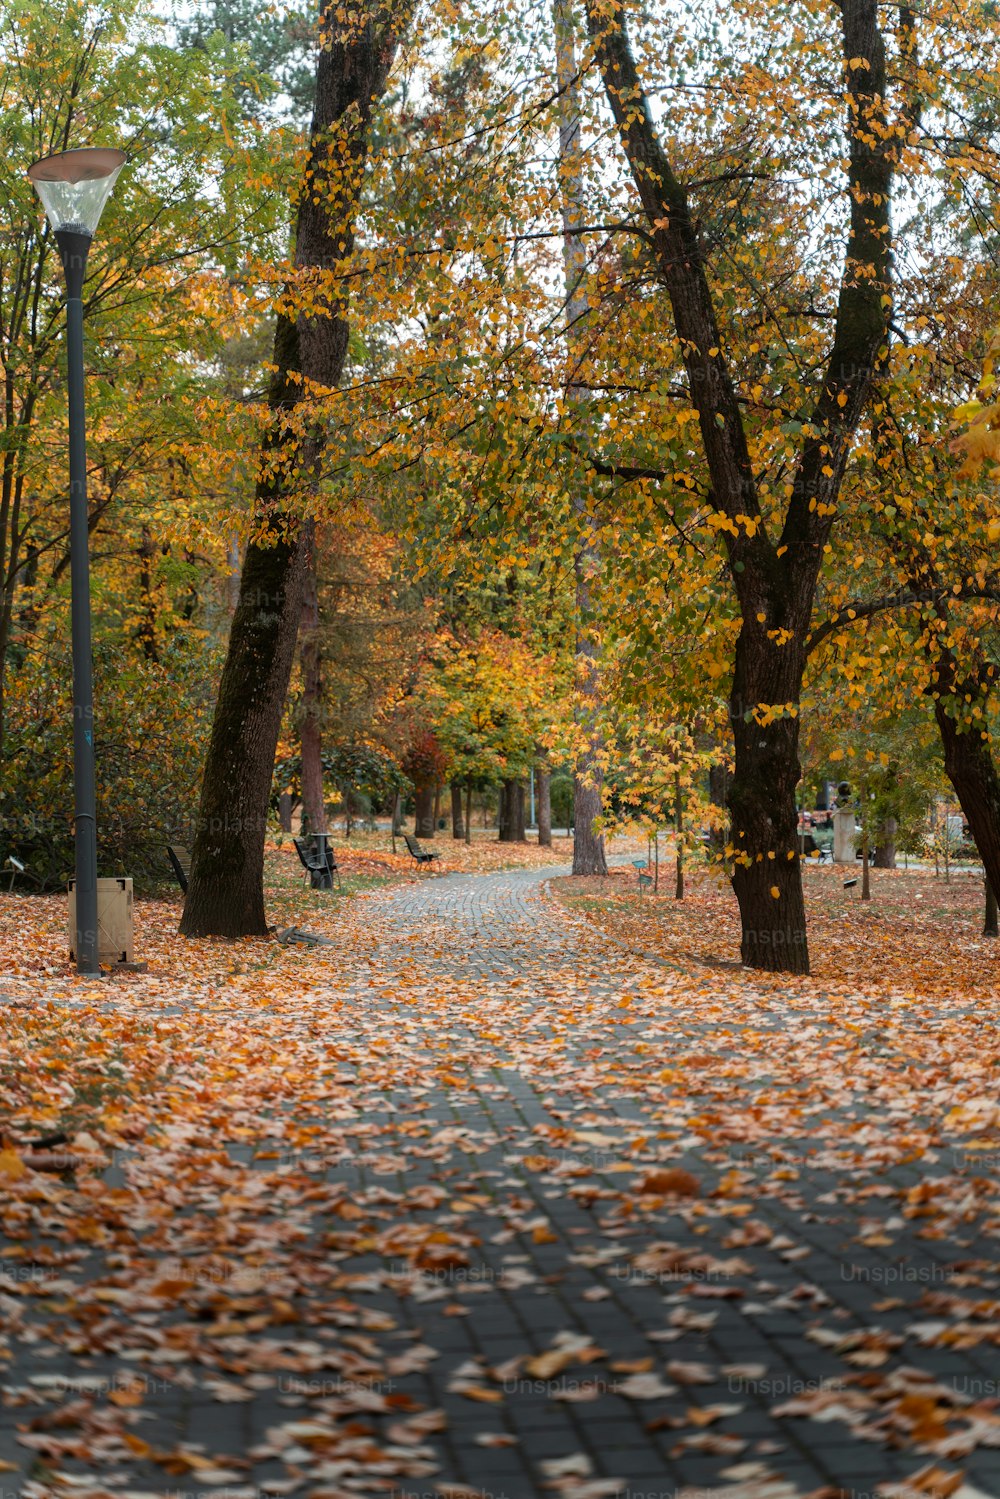 un sentiero in un parco con molte foglie a terra